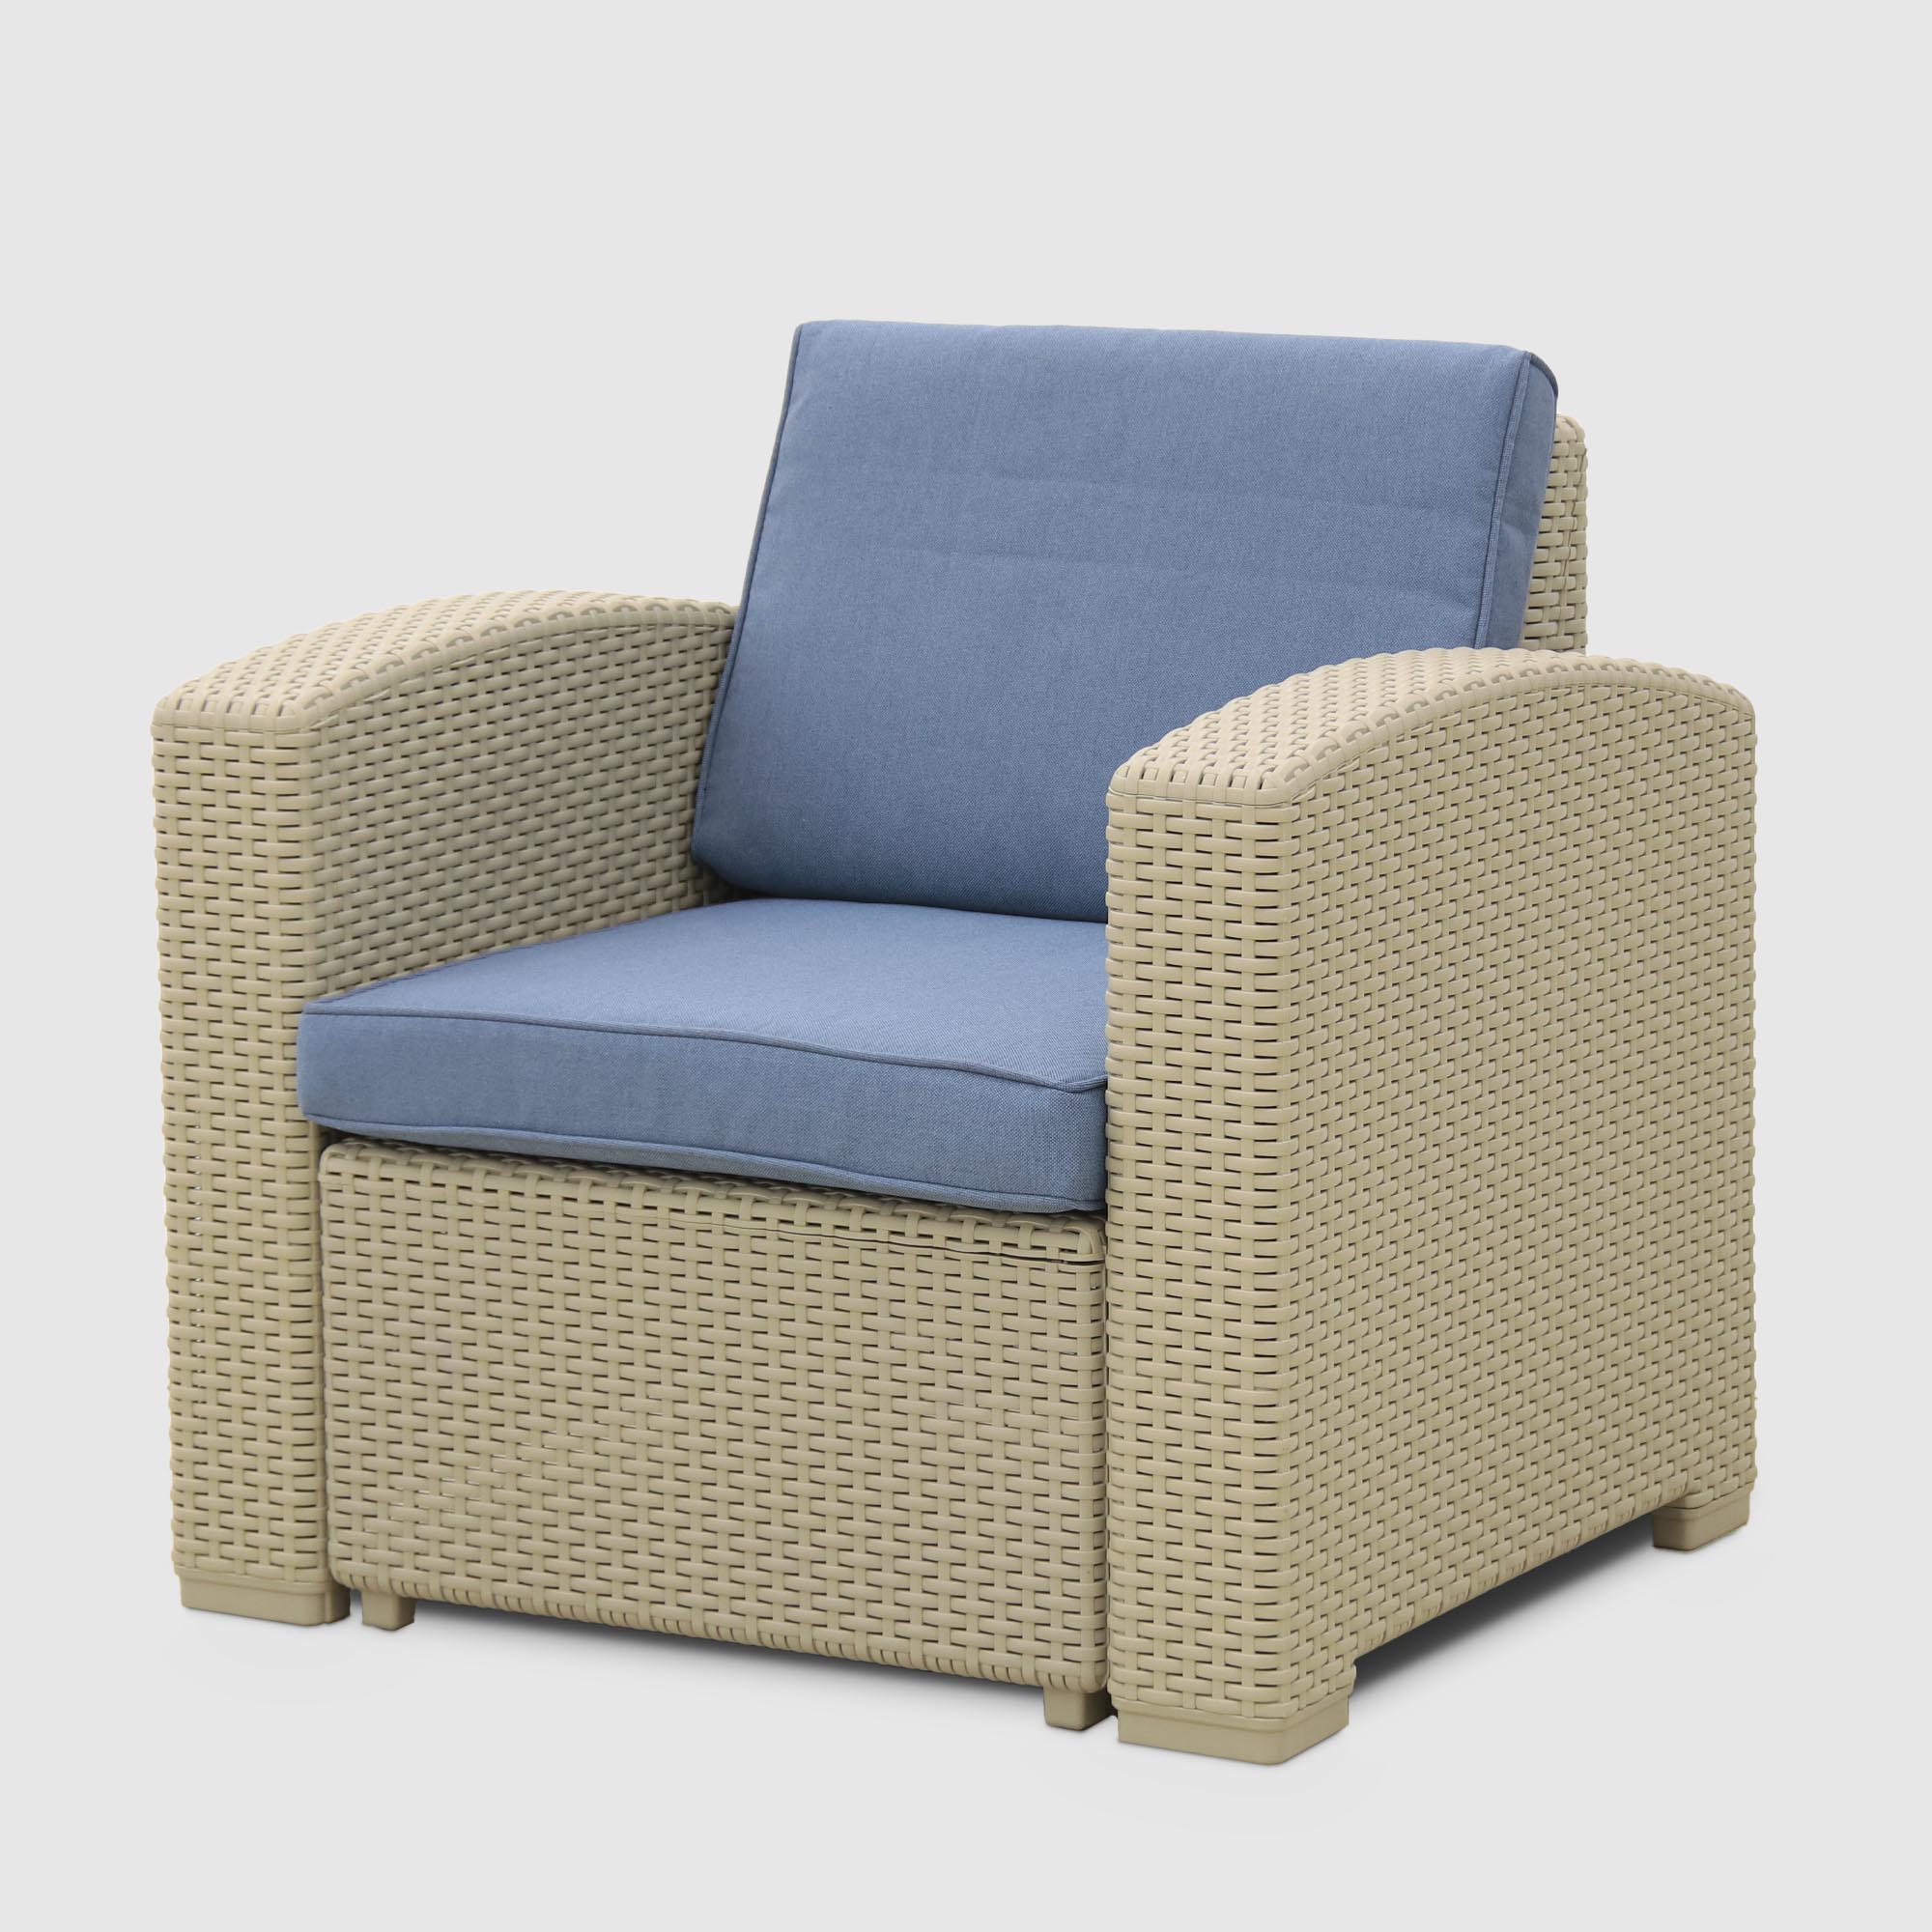 Комплект мебели LF стол+софа 3-х местная+2 кресла+тумбочка серый, цвет синий, размер 199x75x71 - фото 5